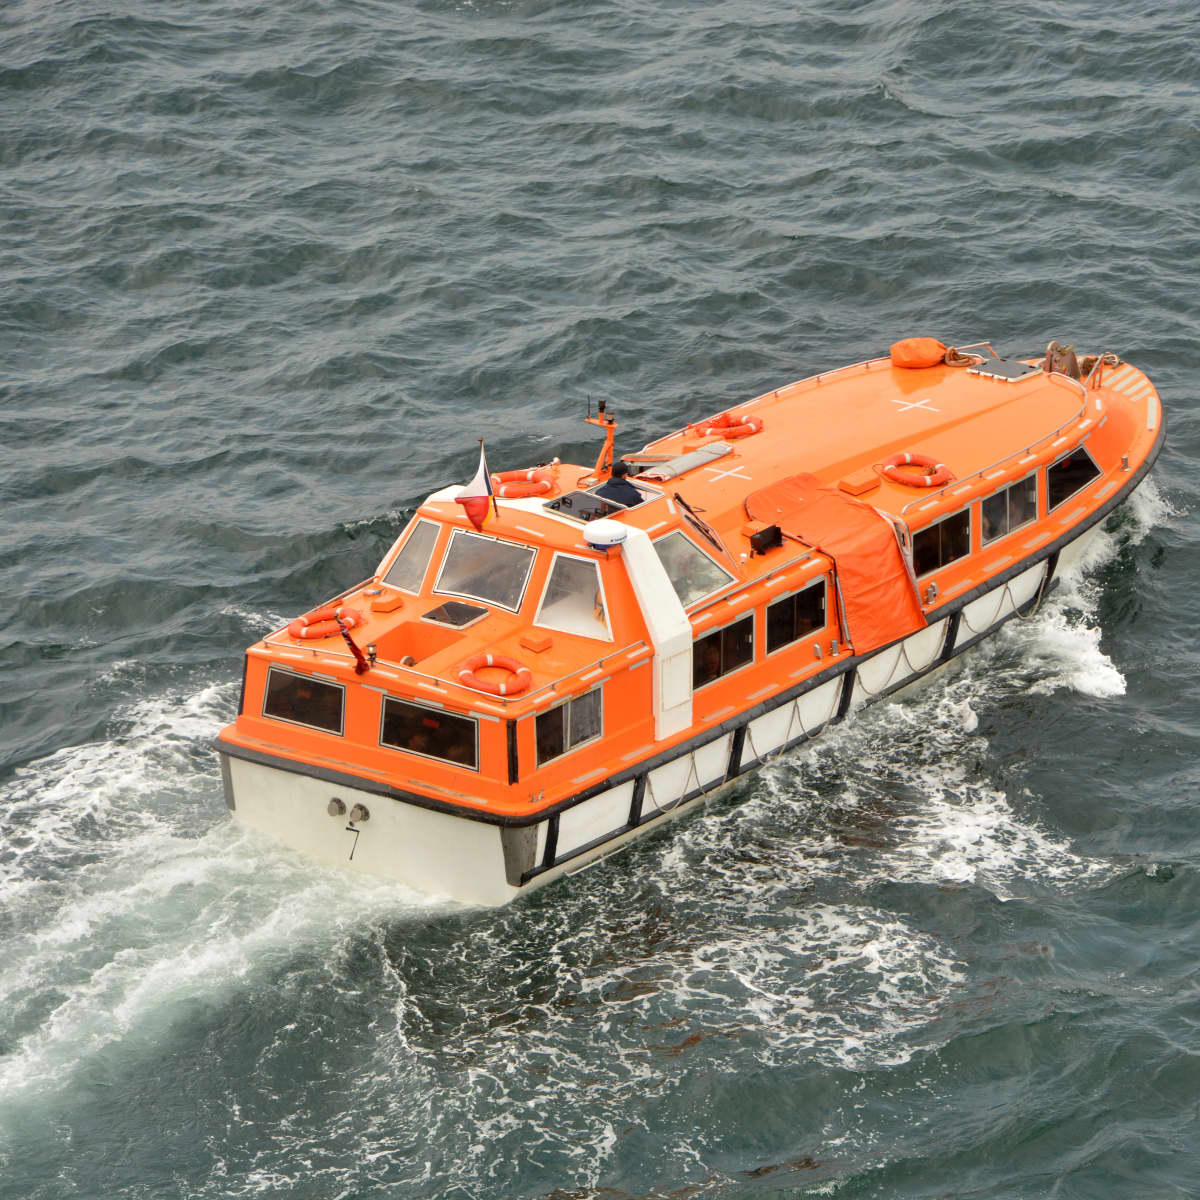 ocean lifeboats